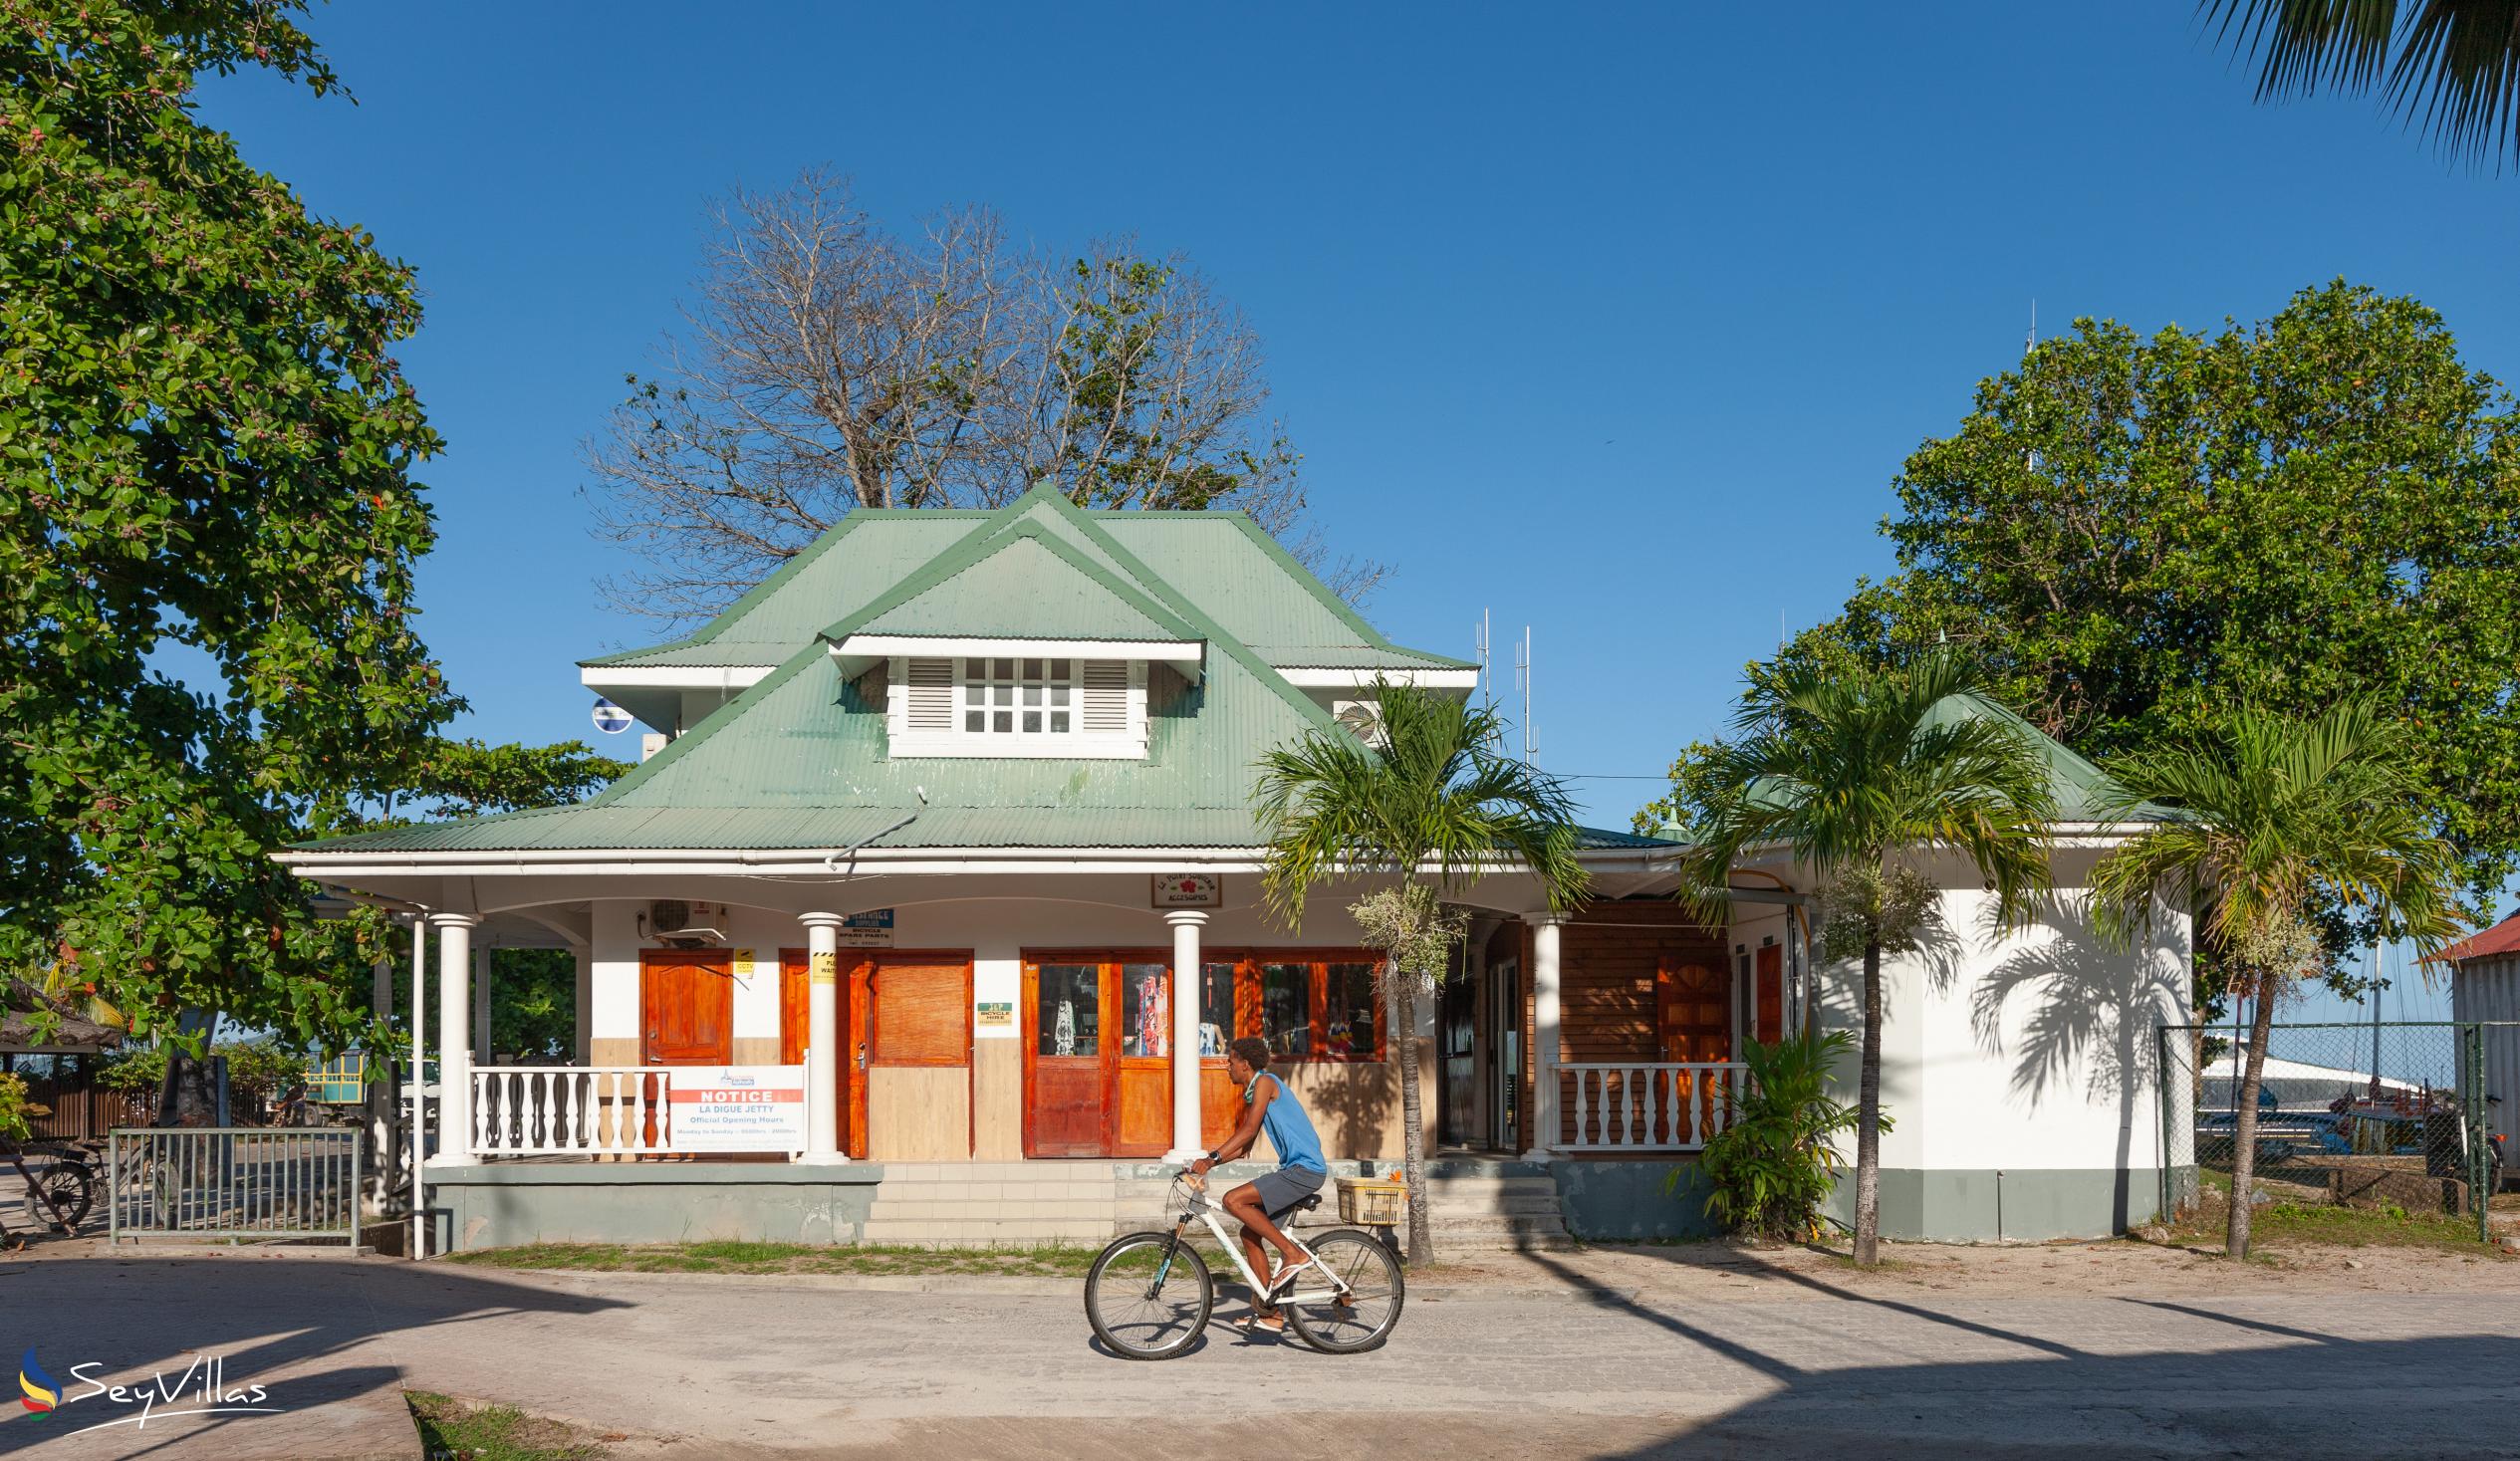 Foto 24: Villa Charette - Lage - La Digue (Seychellen)